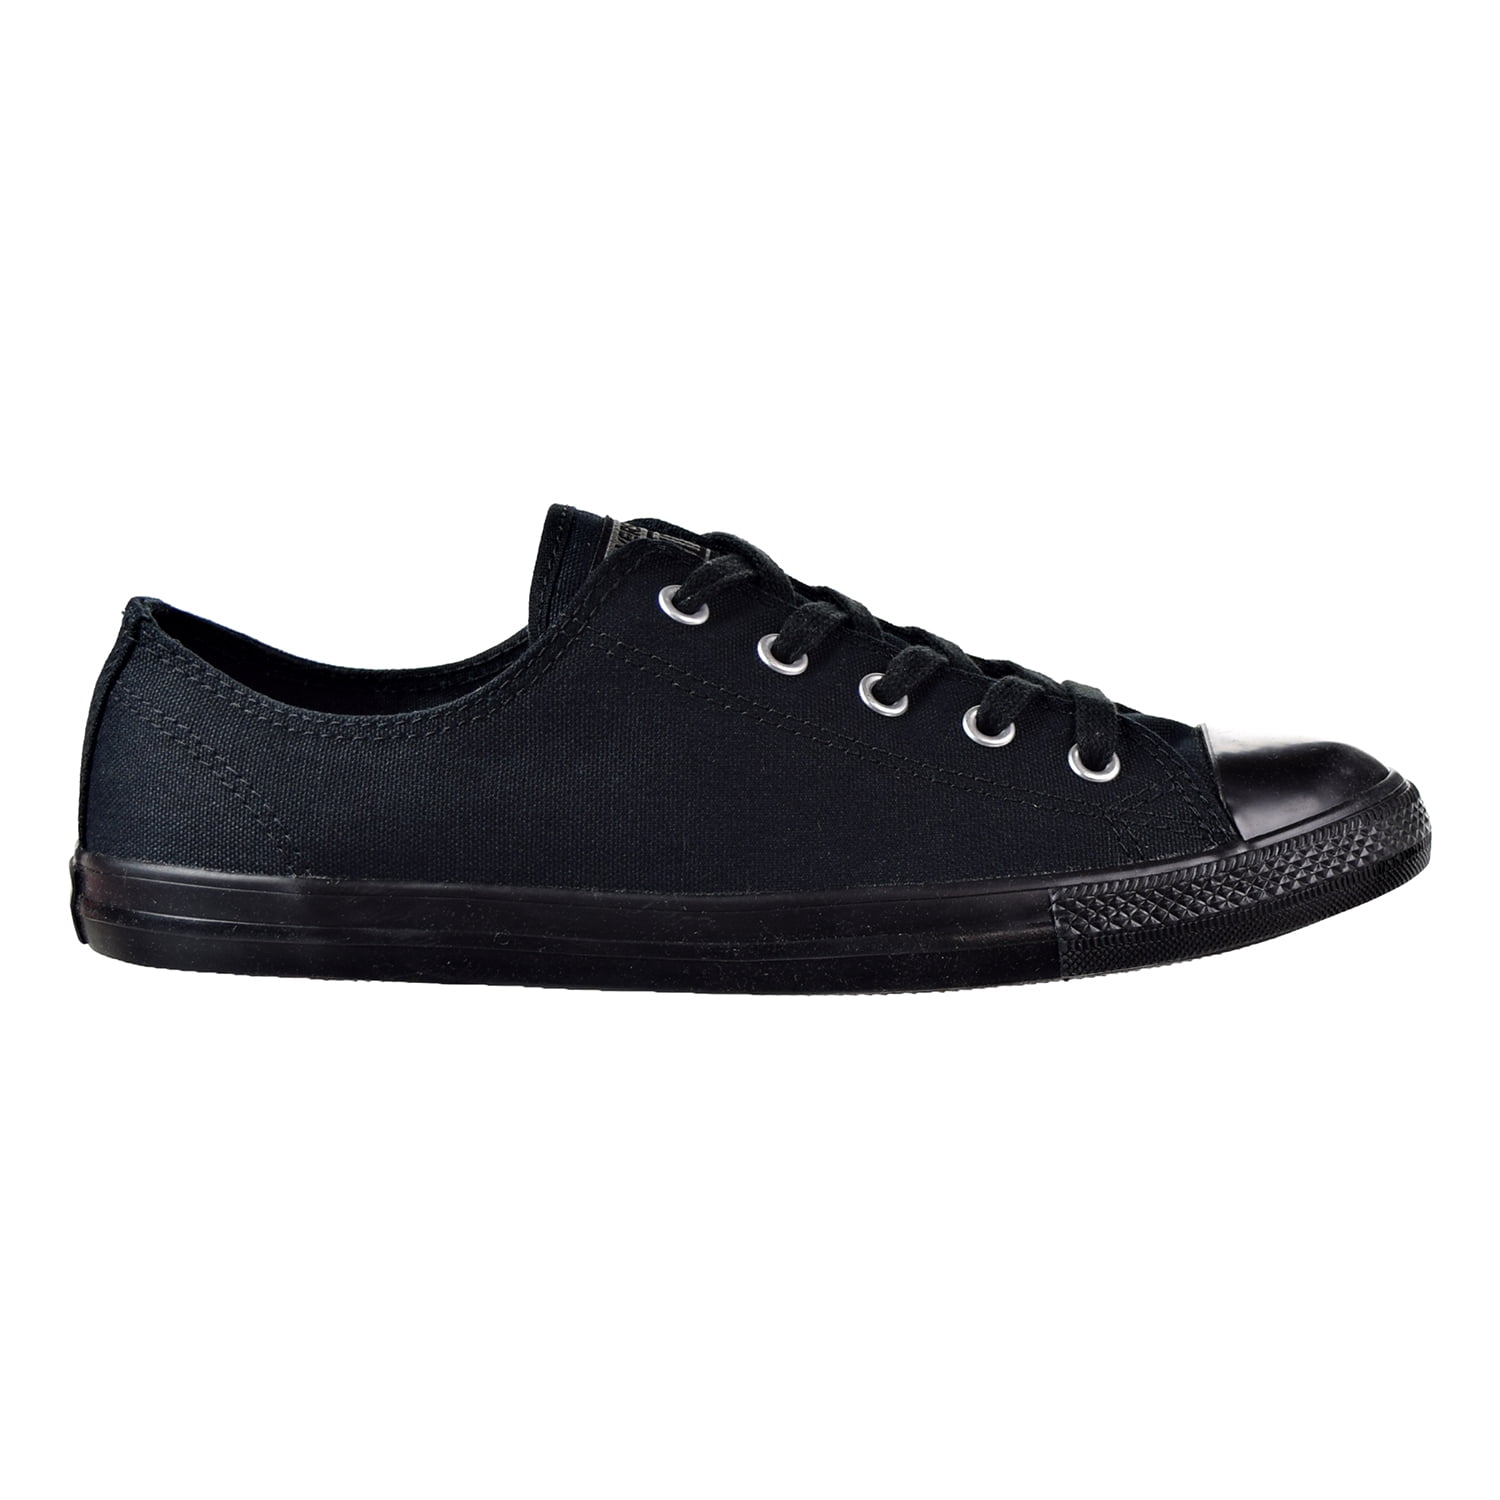 Sandalen openbaring maagd Converse Chuck Taylor All Star Dainty Ox Women's Shoes Black/Black 532354f  - Walmart.com